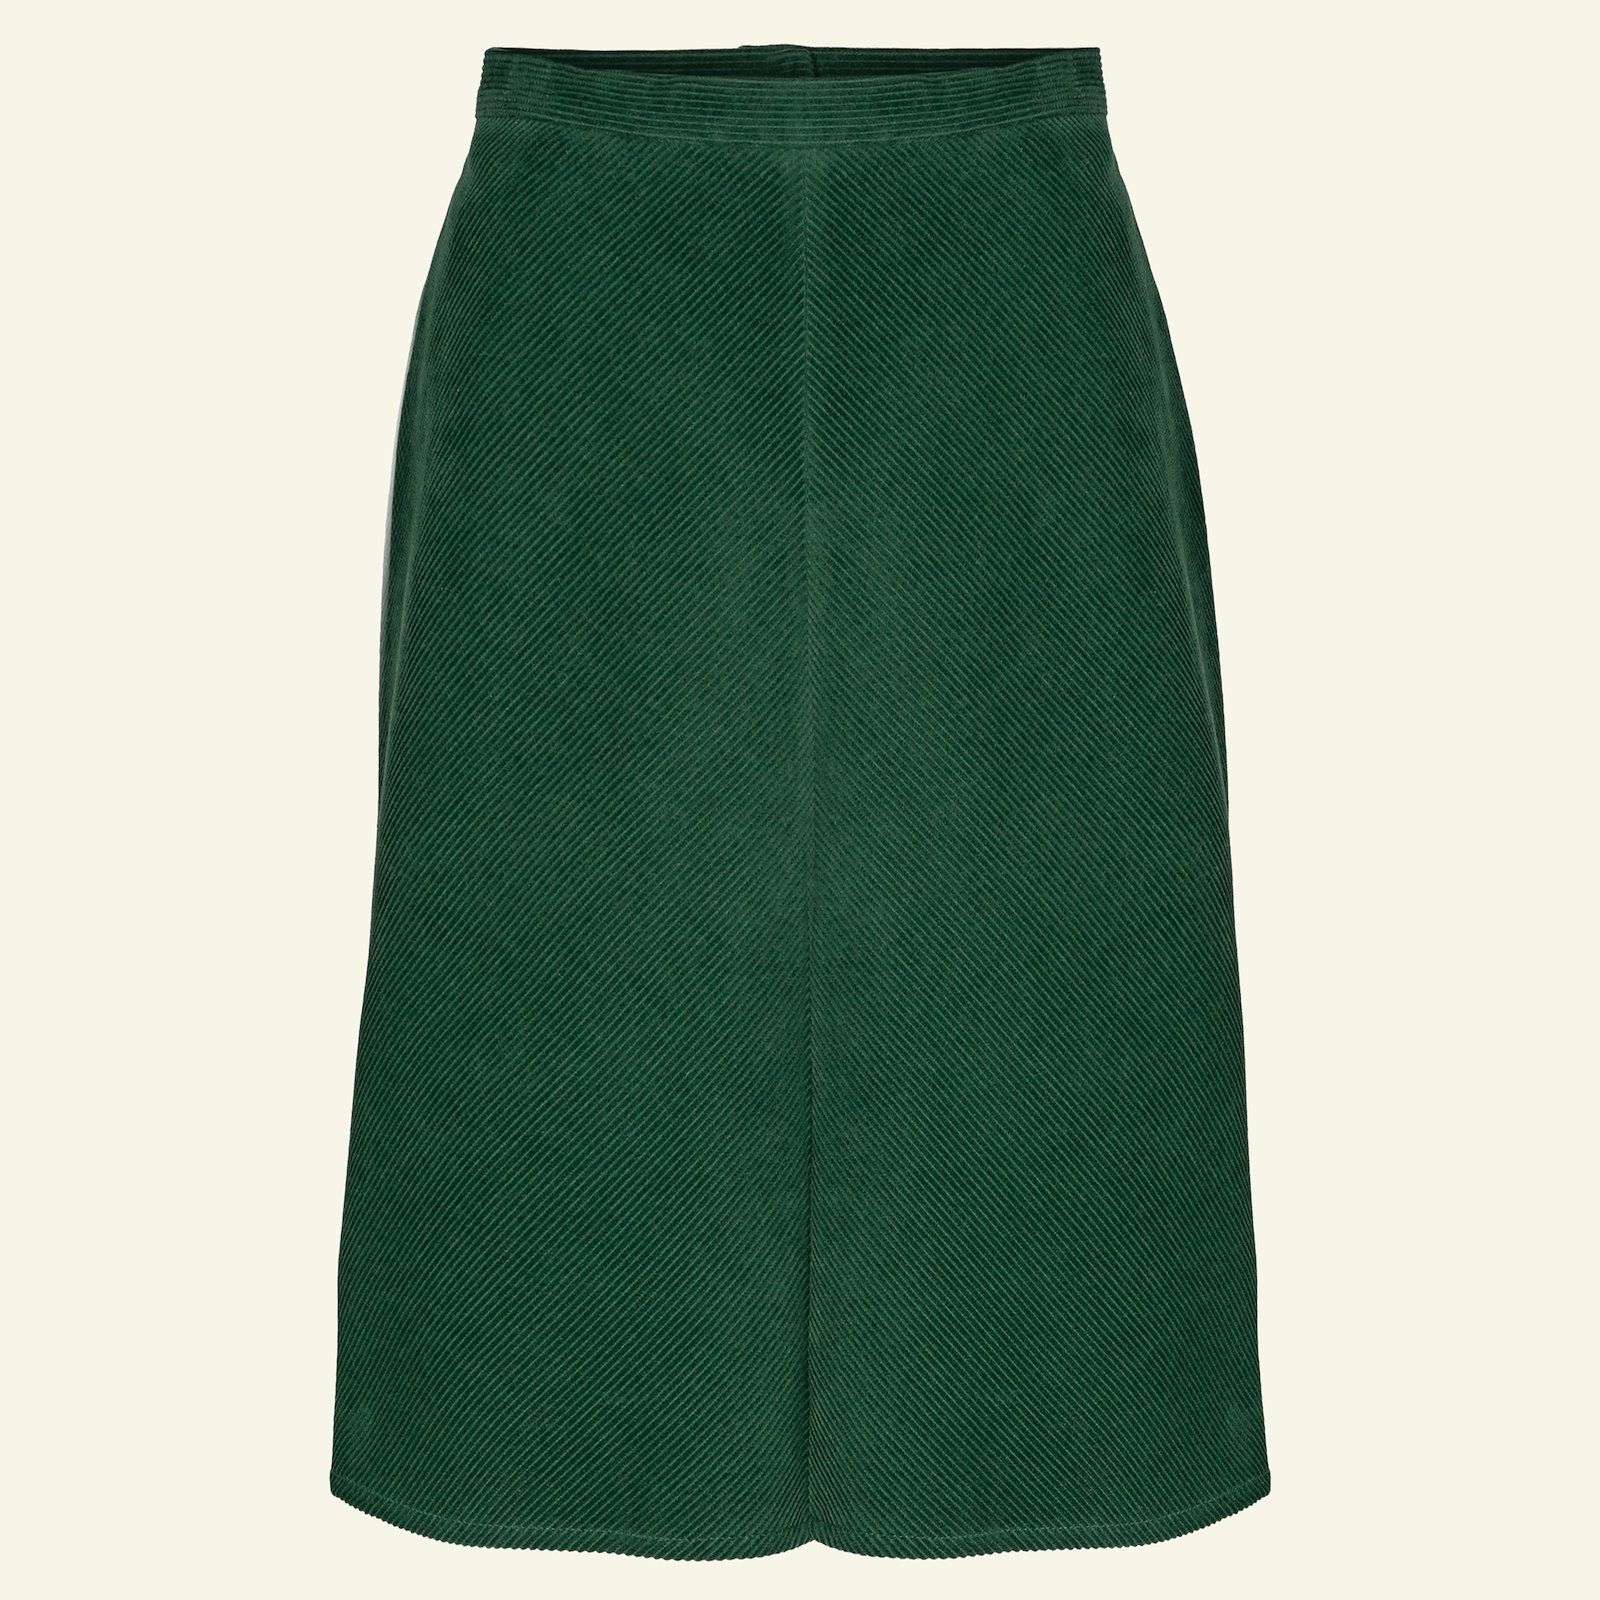 Skirt with A-shape, 44/16 p21038_430819_sskit